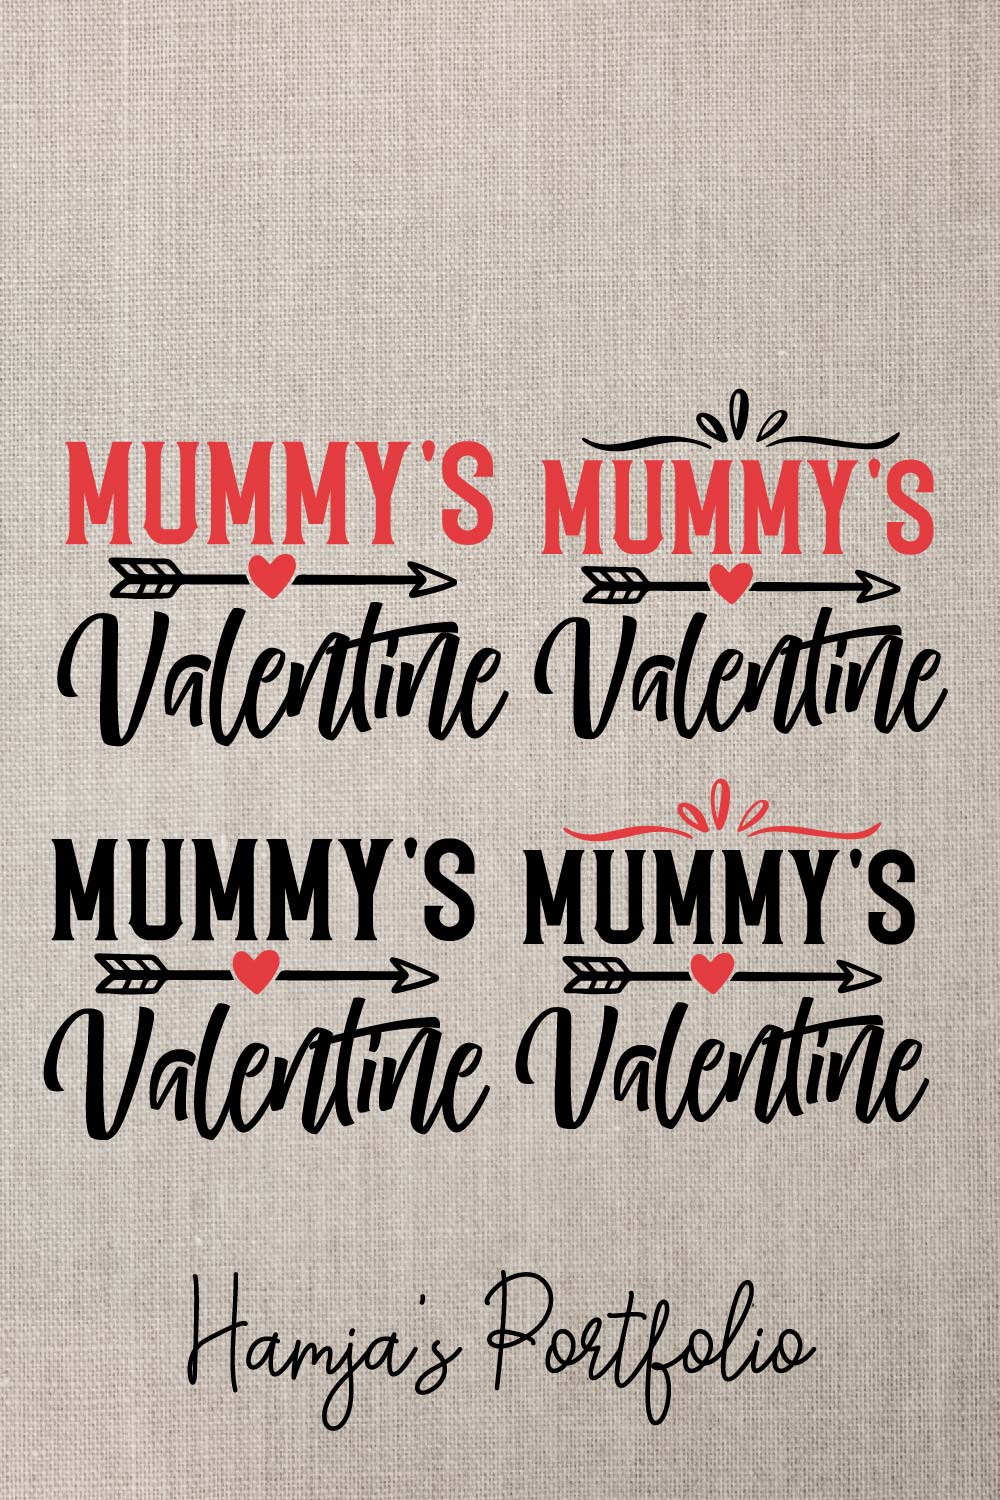 Mummy 's Valentine Vector pinterest preview image.